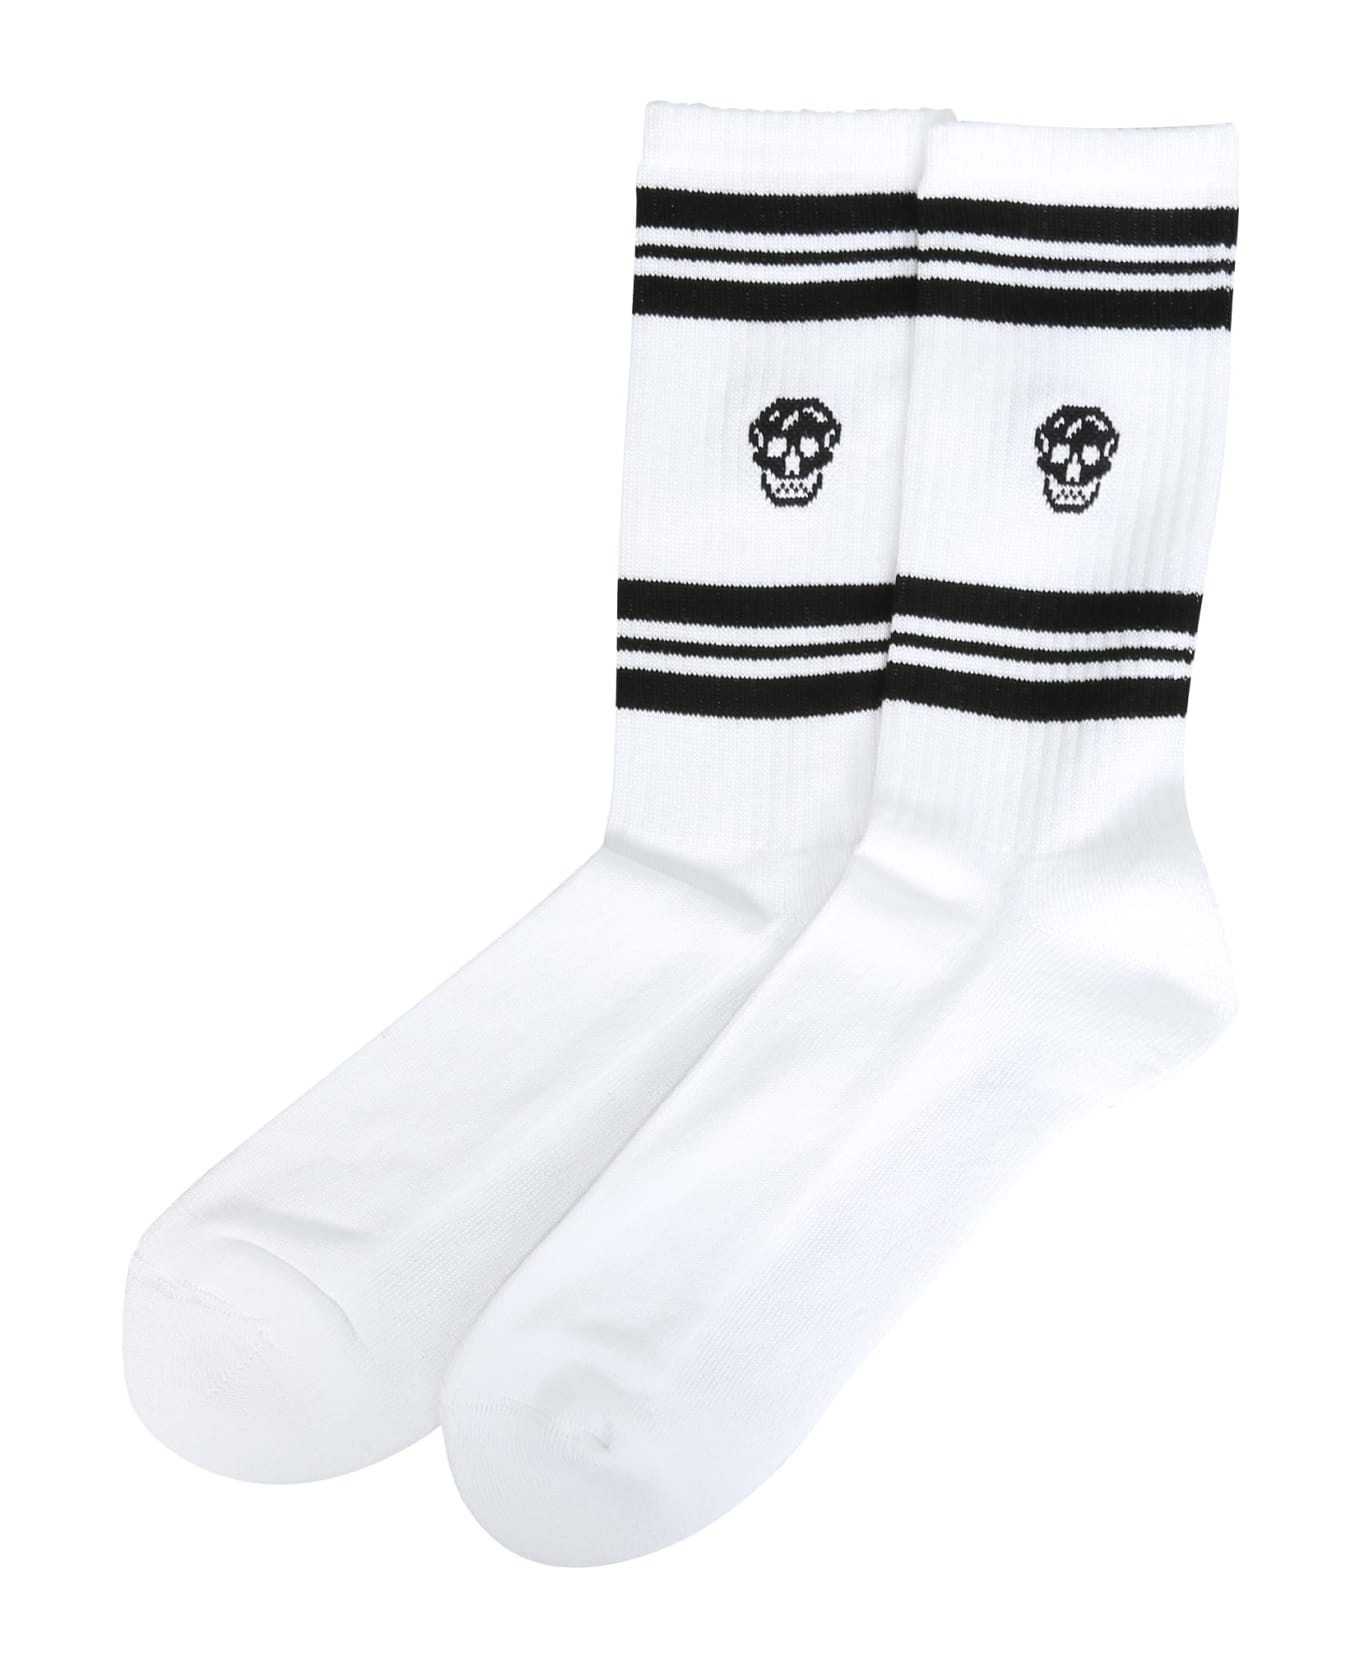 Sports Skull Socks - 2